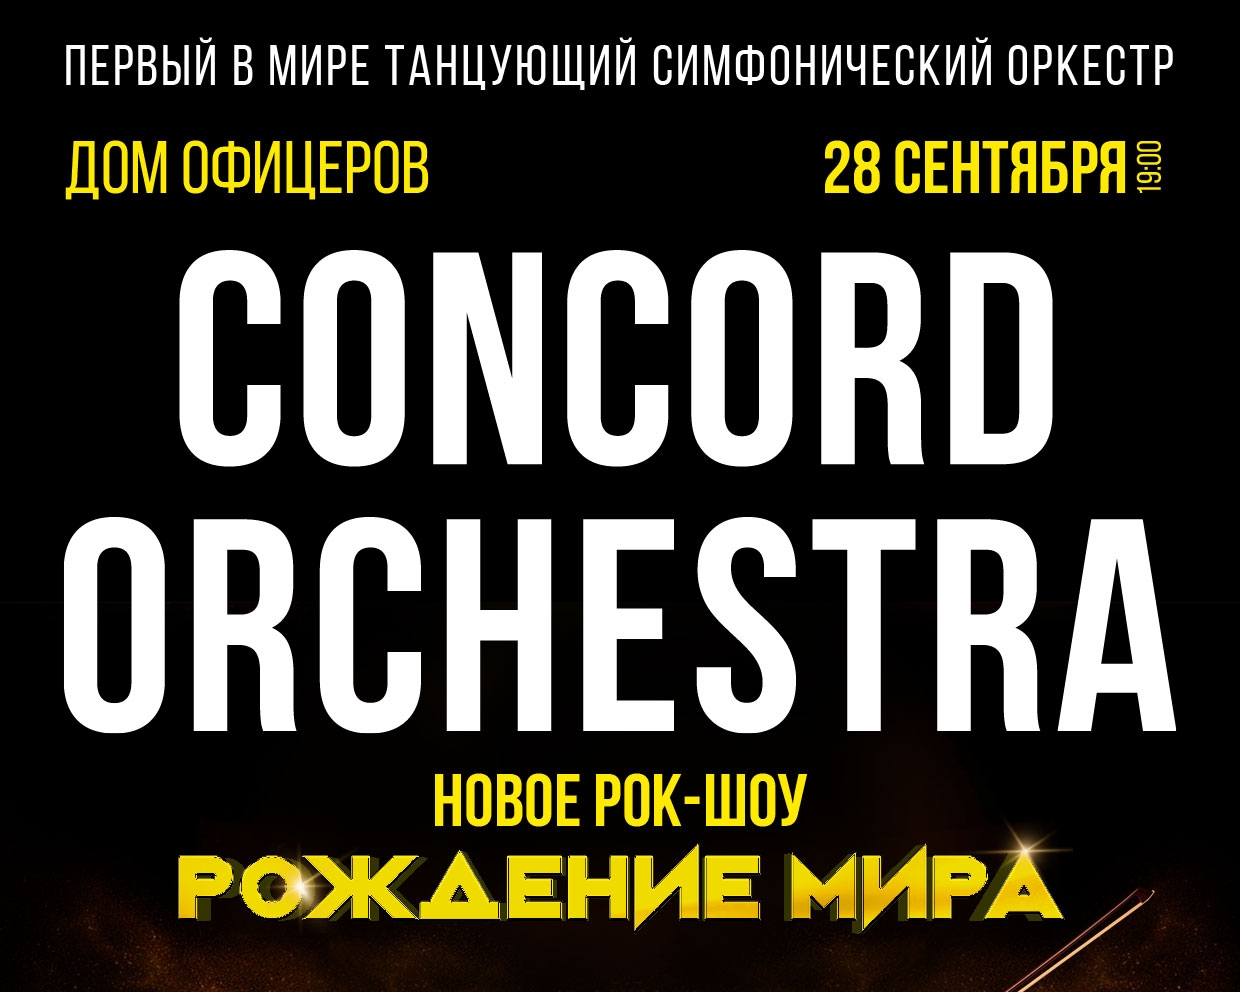 Concord orchestra билеты